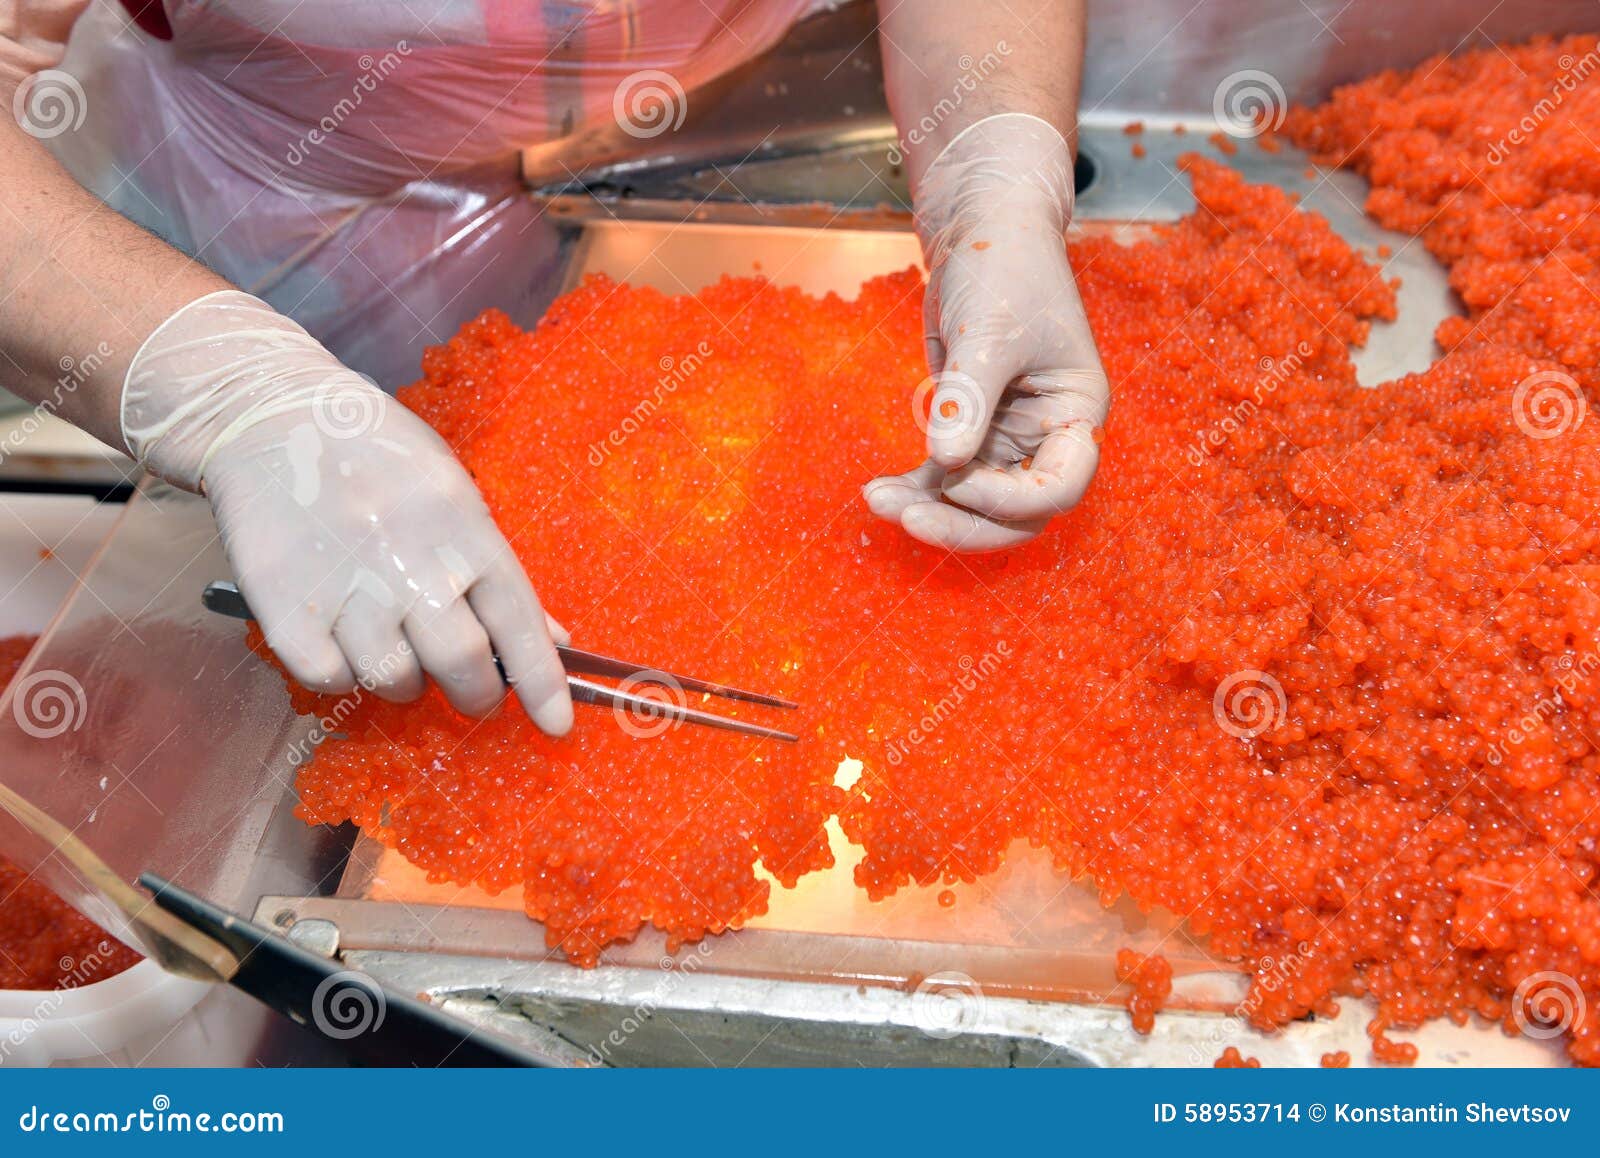 https://thumbs.dreamstime.com/z/salmon-caviar-preparing-fishing-processing-plant-58953714.jpg